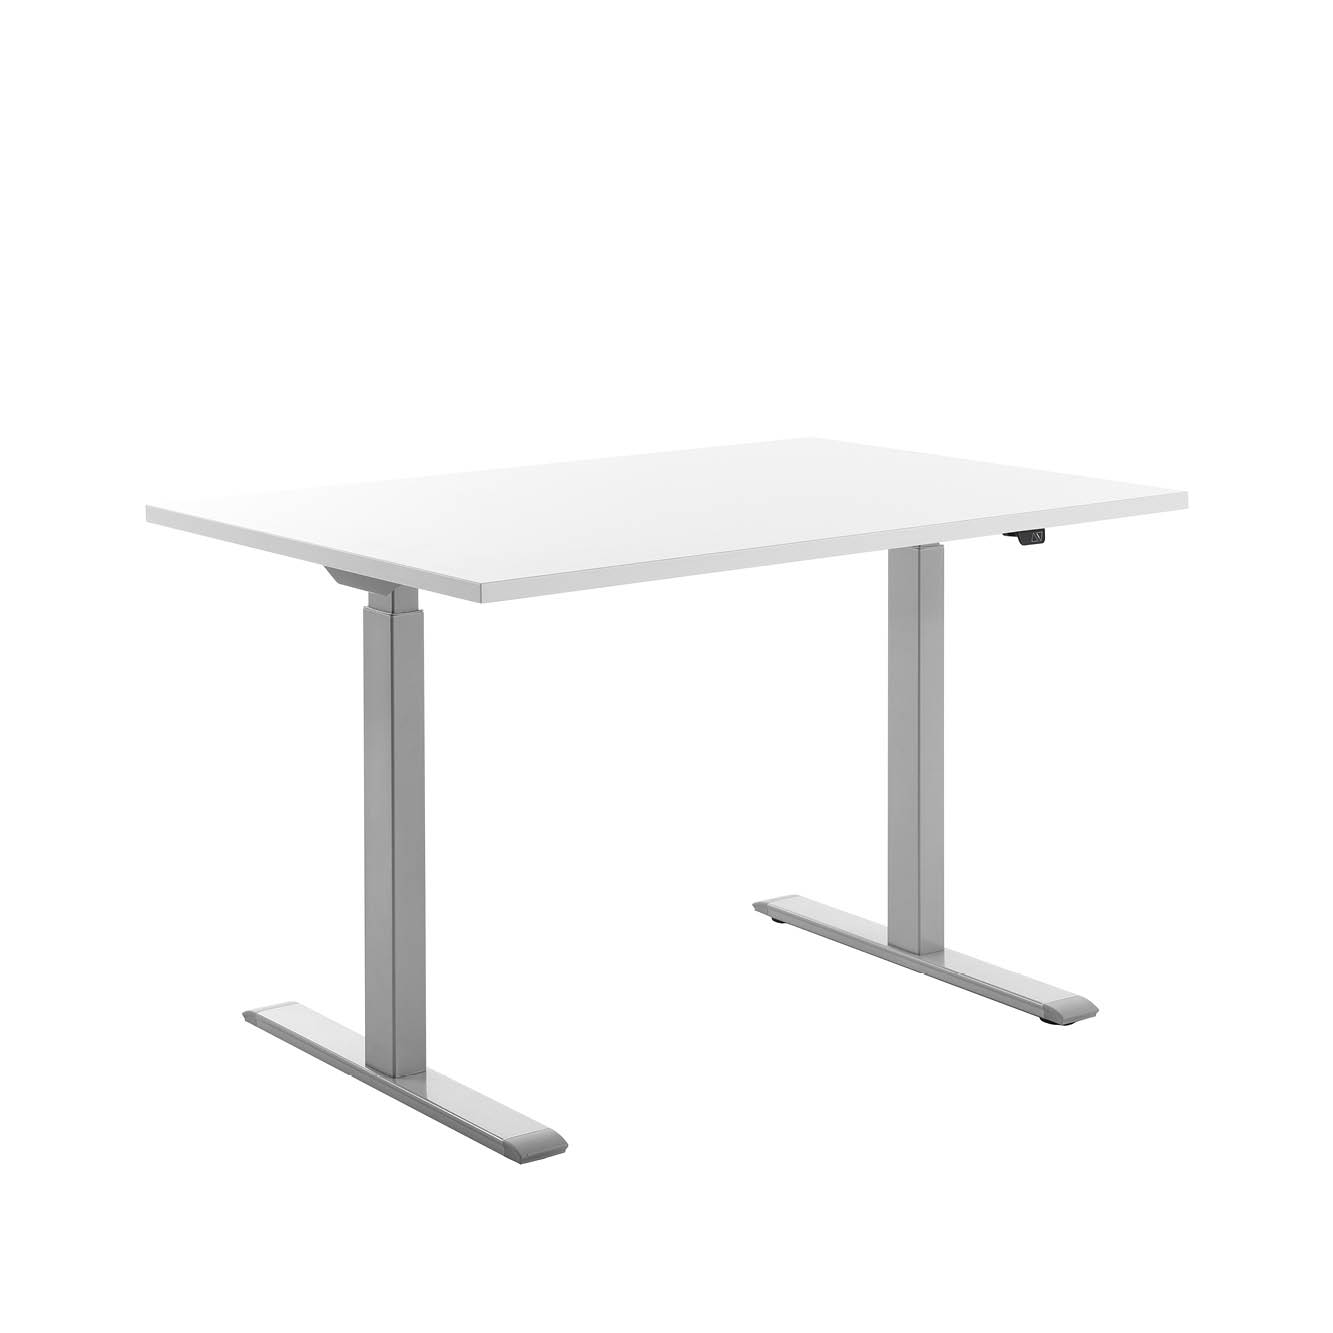 120 x 80 cm Schreibtisch Topstar Ergo E-Table höhenverstellbar - grau, weiss